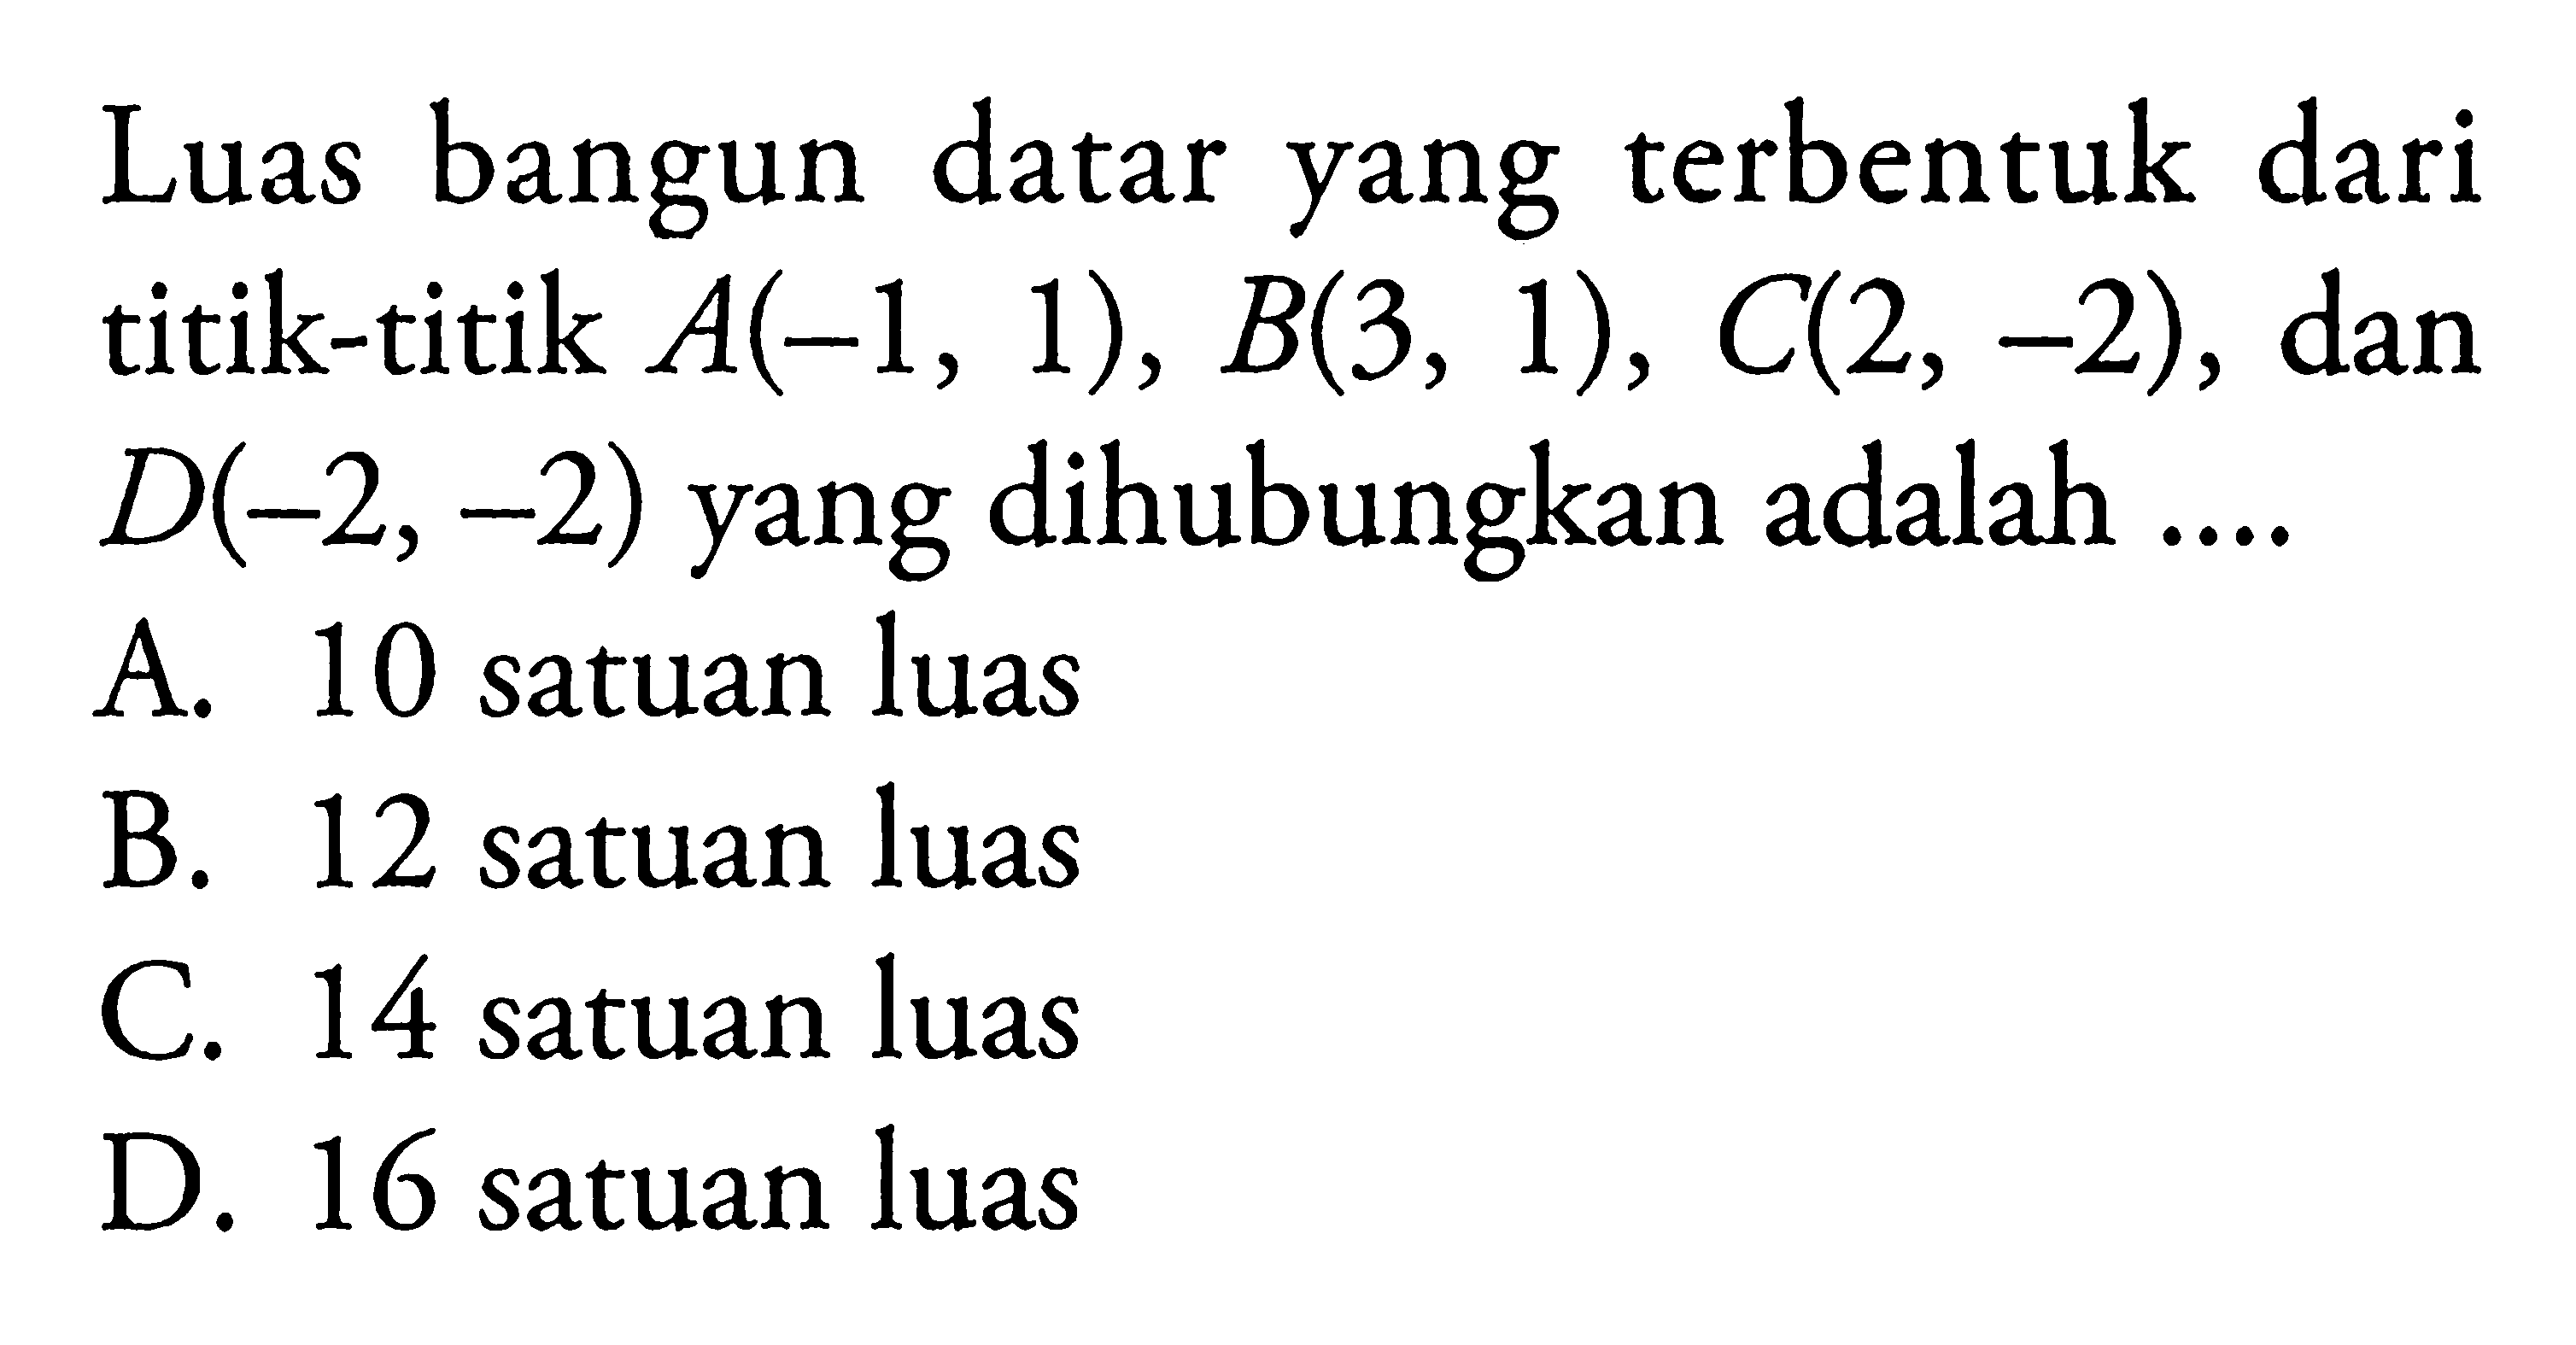 Luas bangun datar yang terbentuk dari titik-titik A(1, 1), B(3, 1), C(2, -2), dan D(-2, -2) yang dihubungkan adalah....